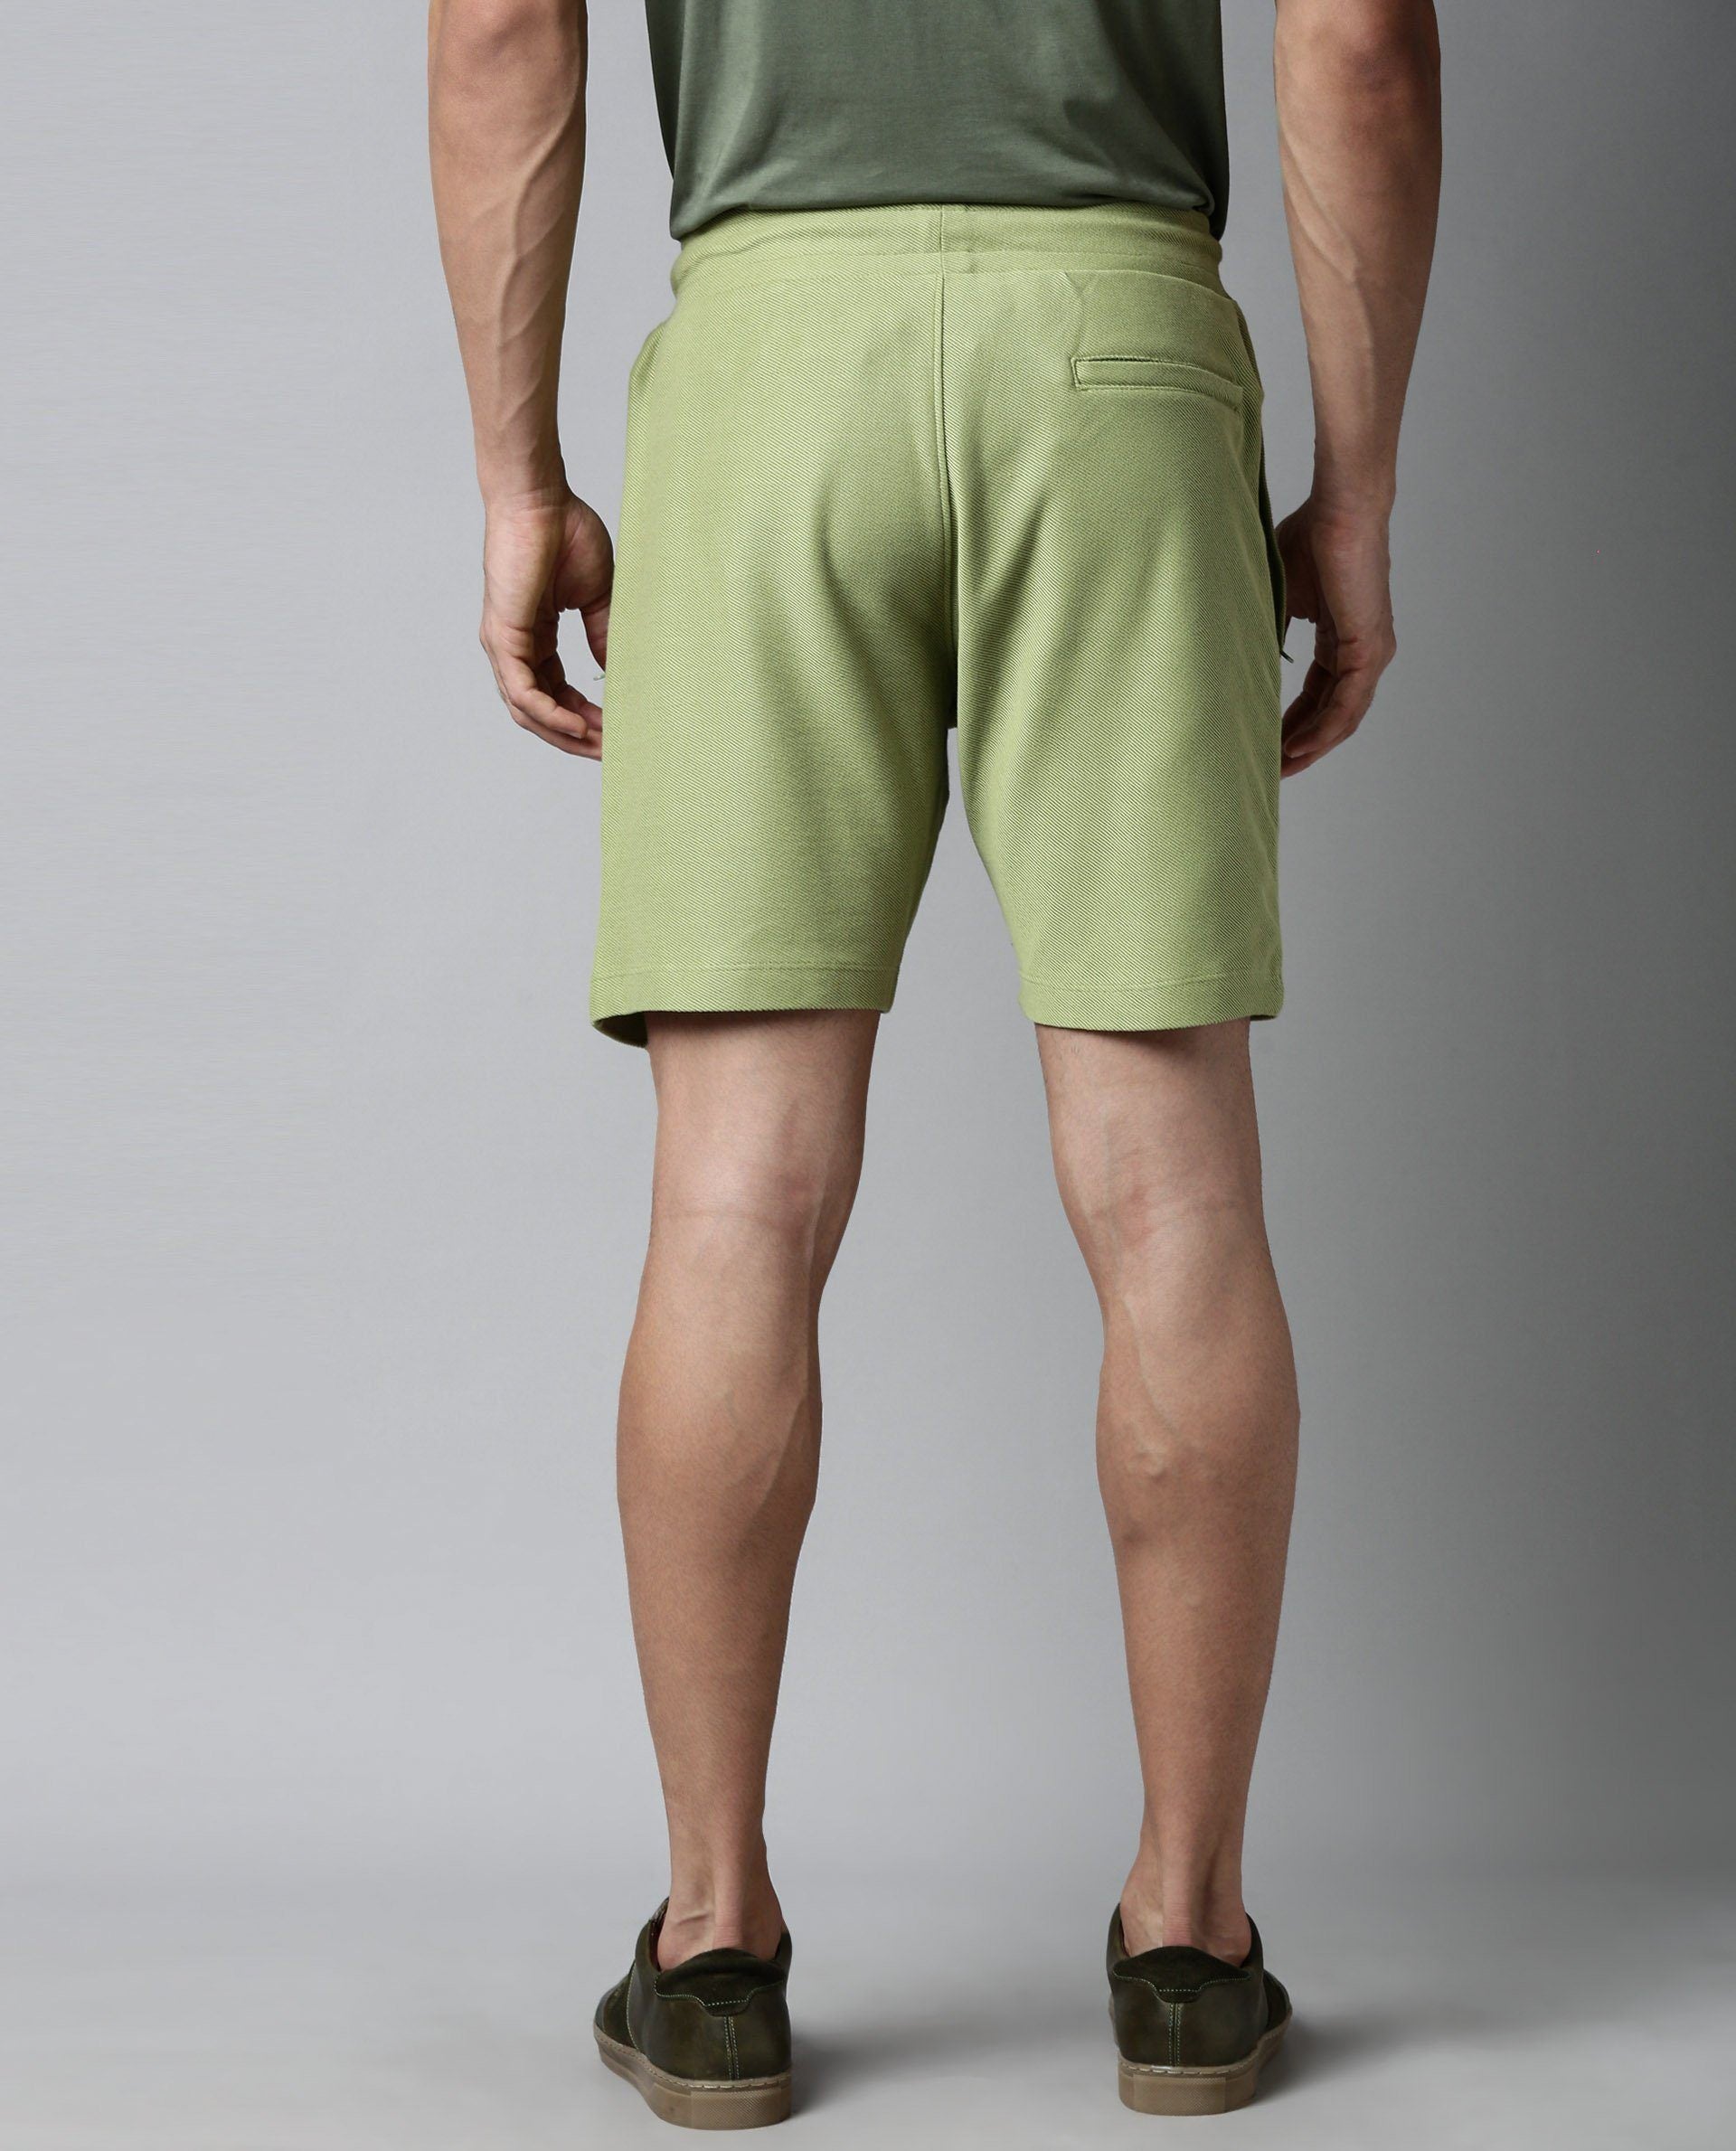 Redbat Men's Green Shorts 